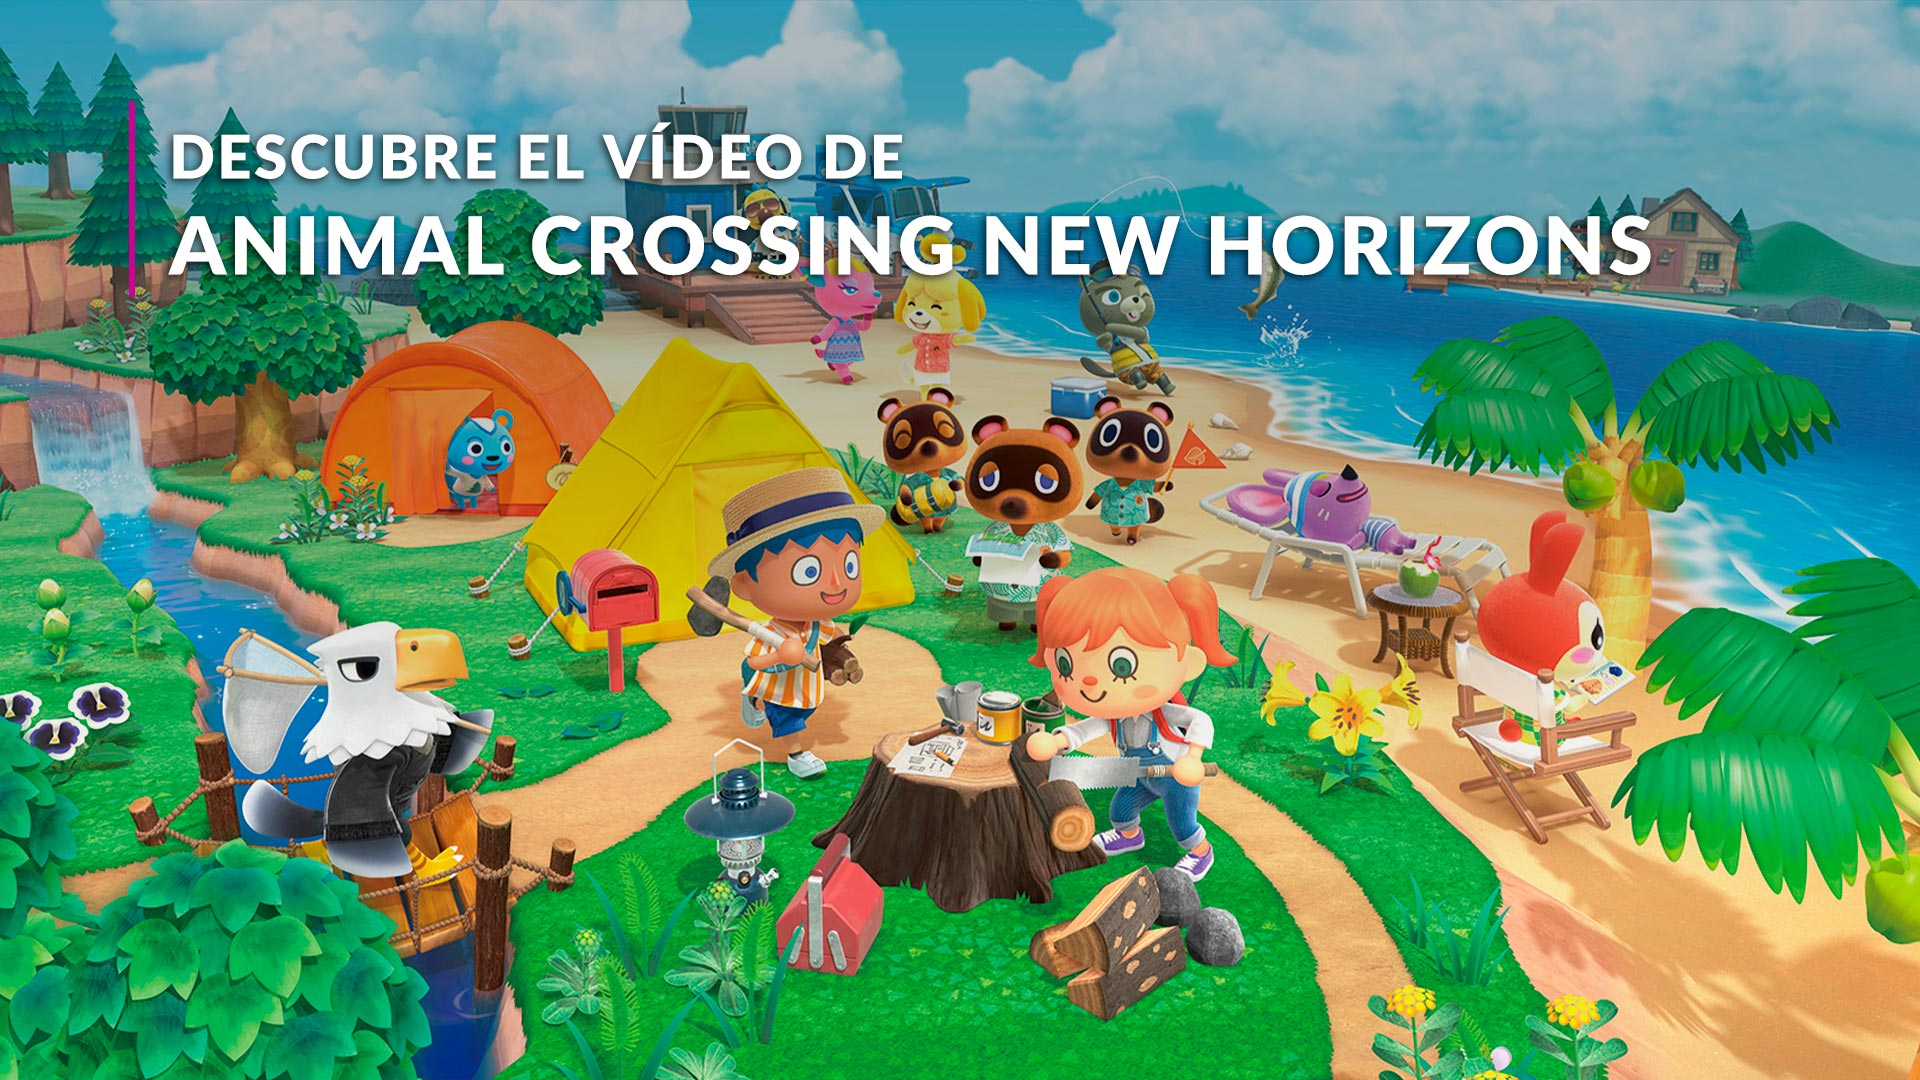 CAJA COMPLETA Tarjetas Amiibo Animal Crossing Serie 2 (42 Sobres)